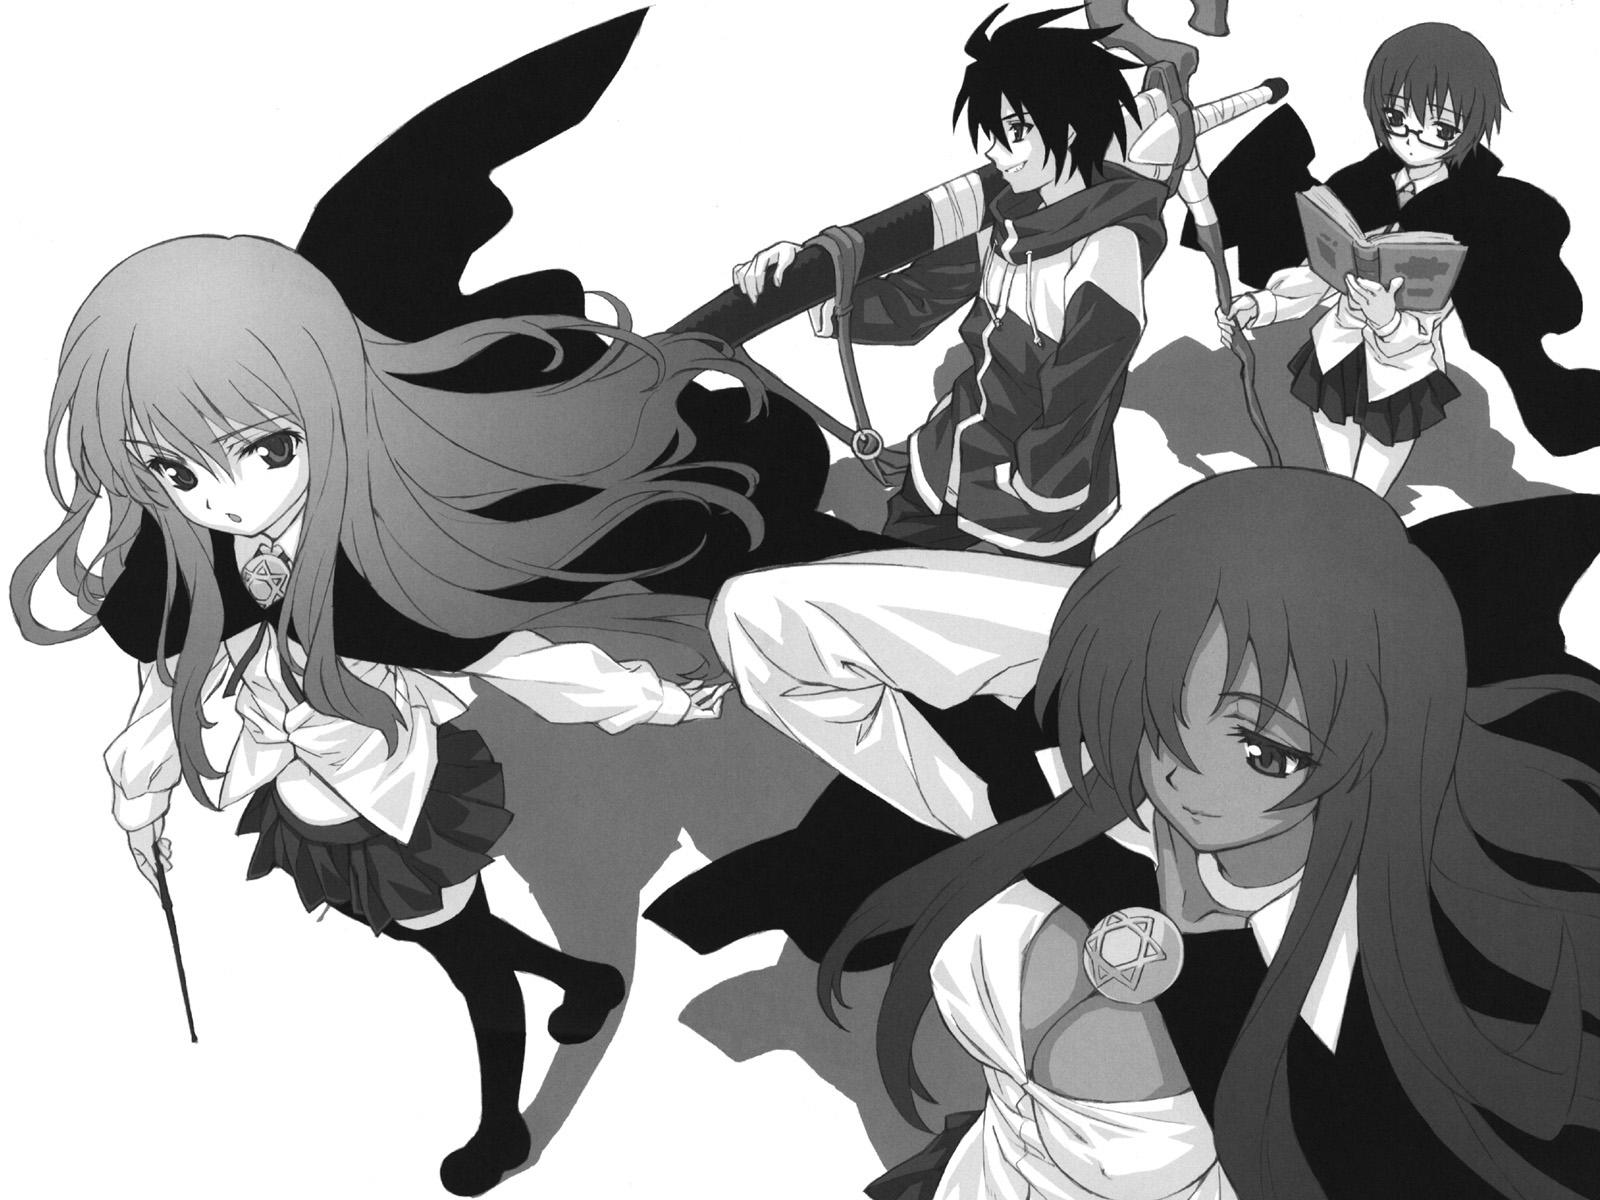 Anime desktop wallpaper featuring characters from Zero no Tsukaima series.